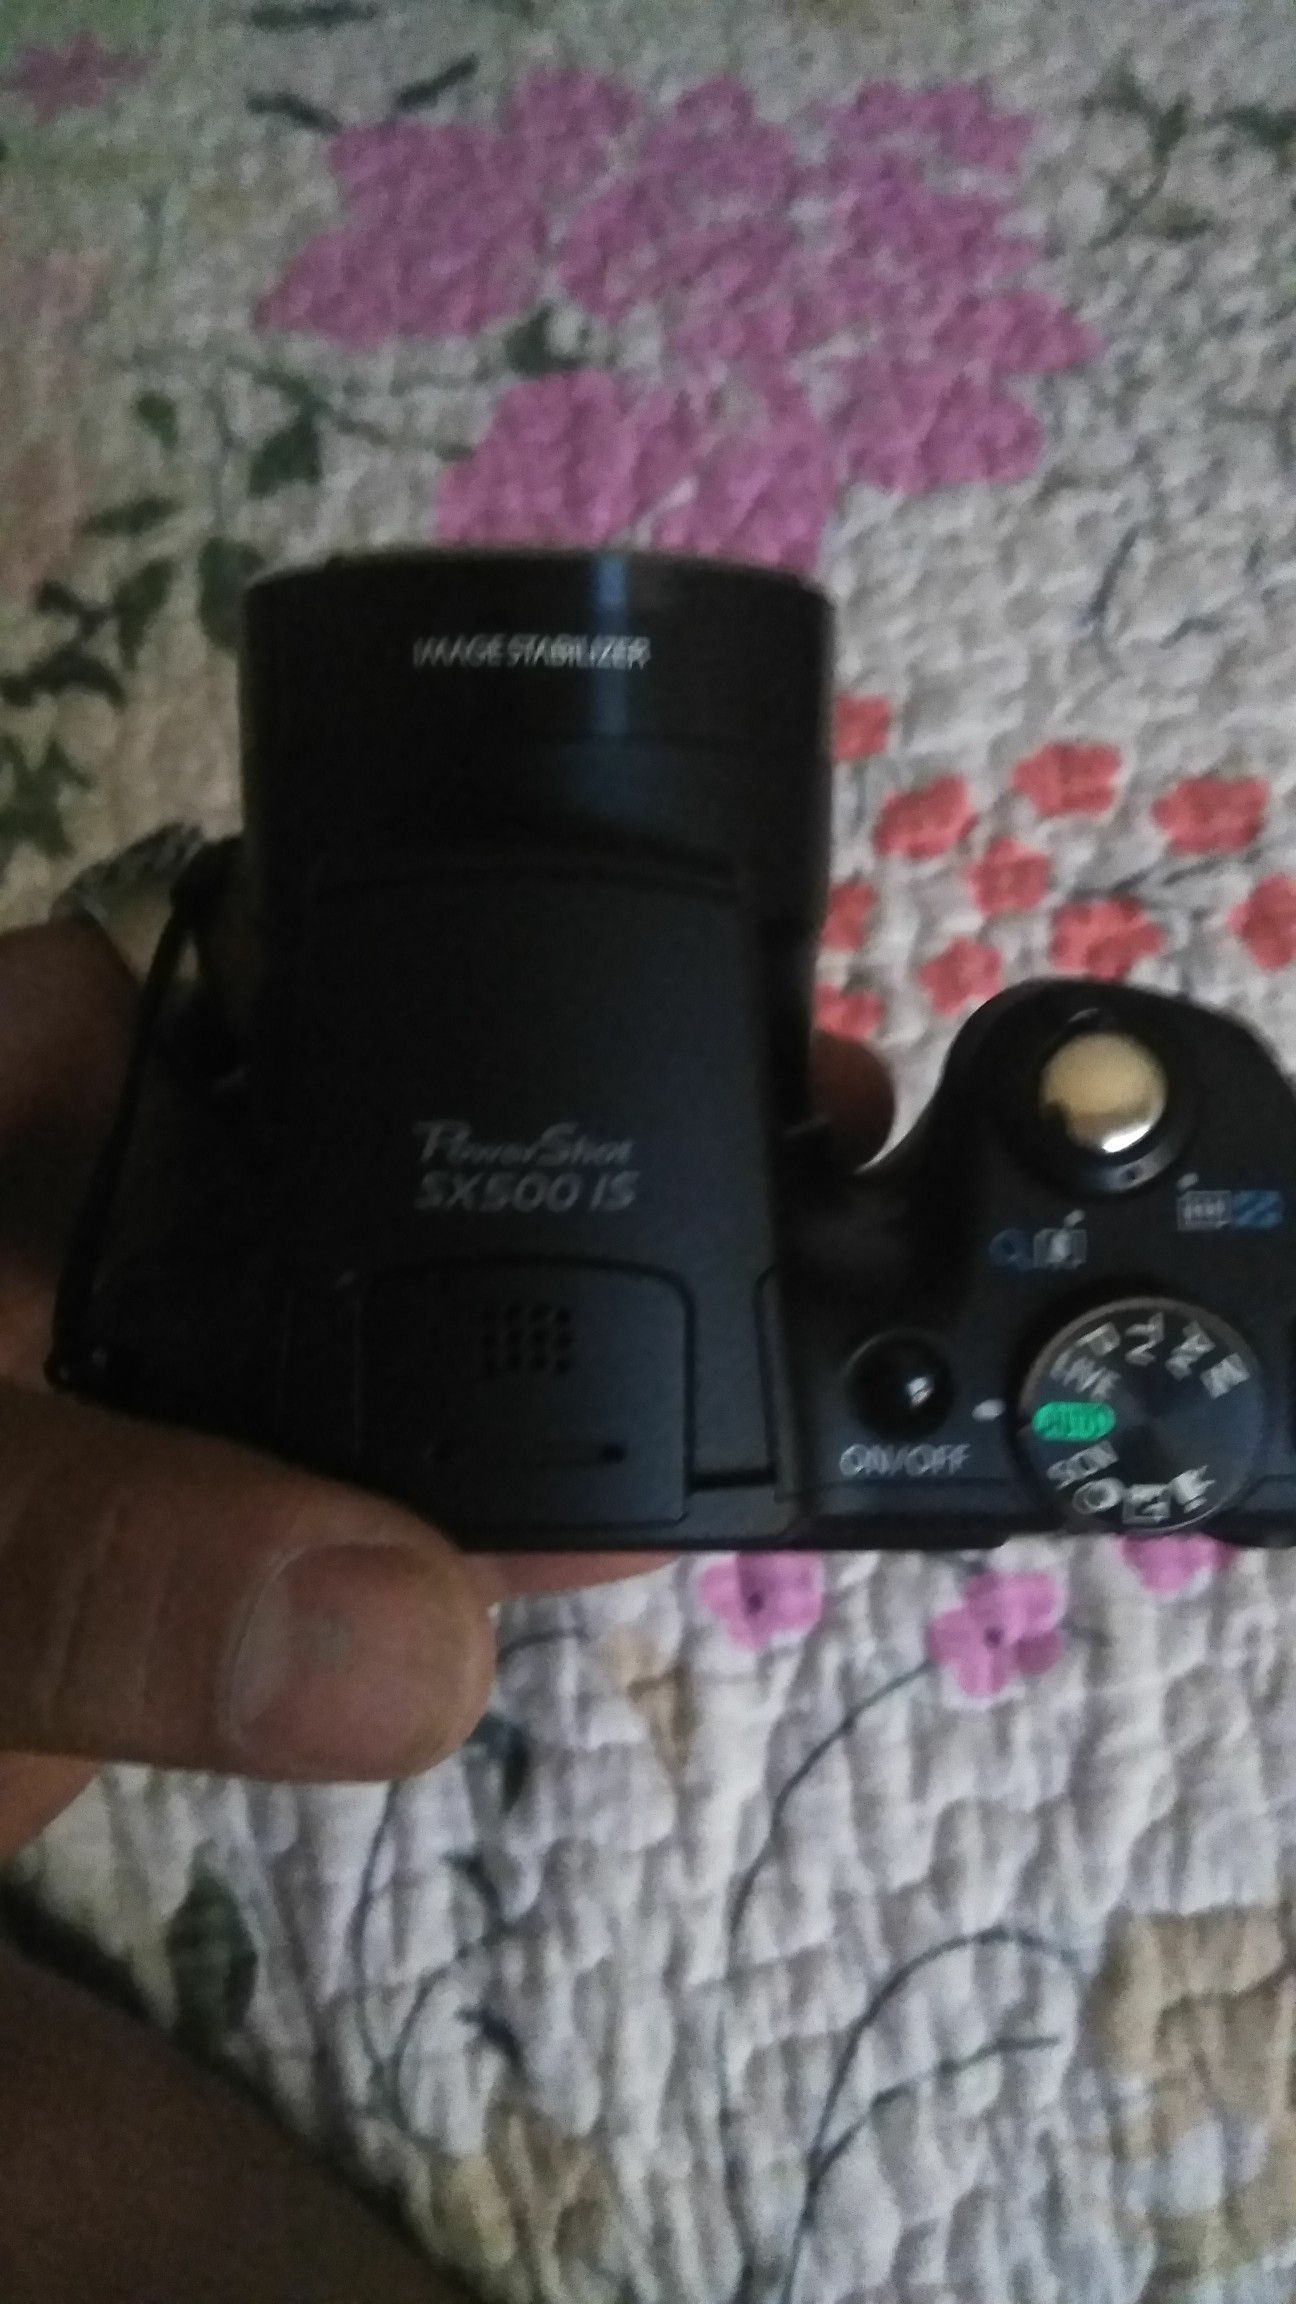 Canon PowerShot sx500is